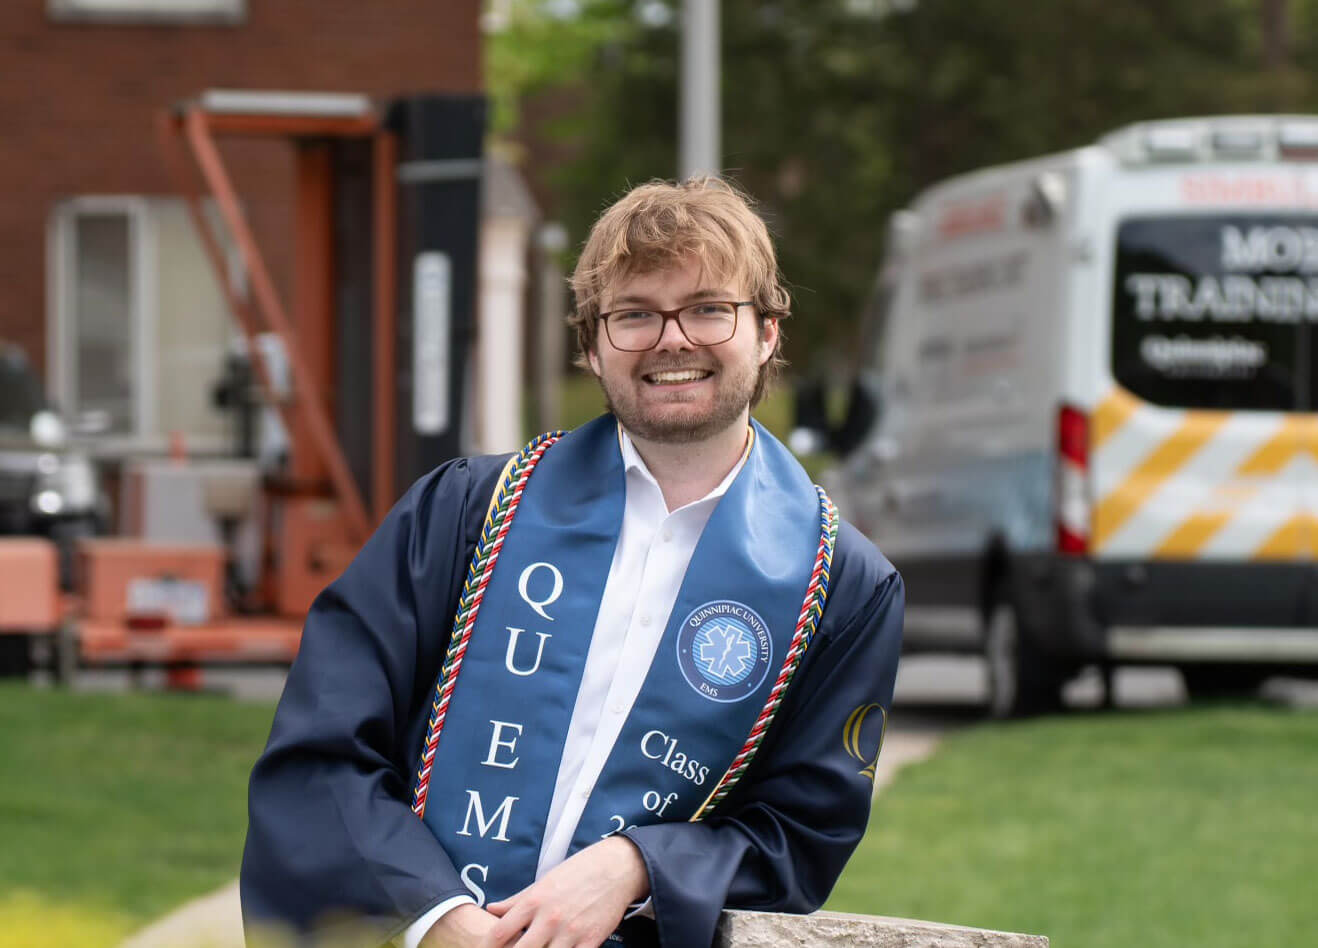 Jonas Vorbau smiling in his graduation gown